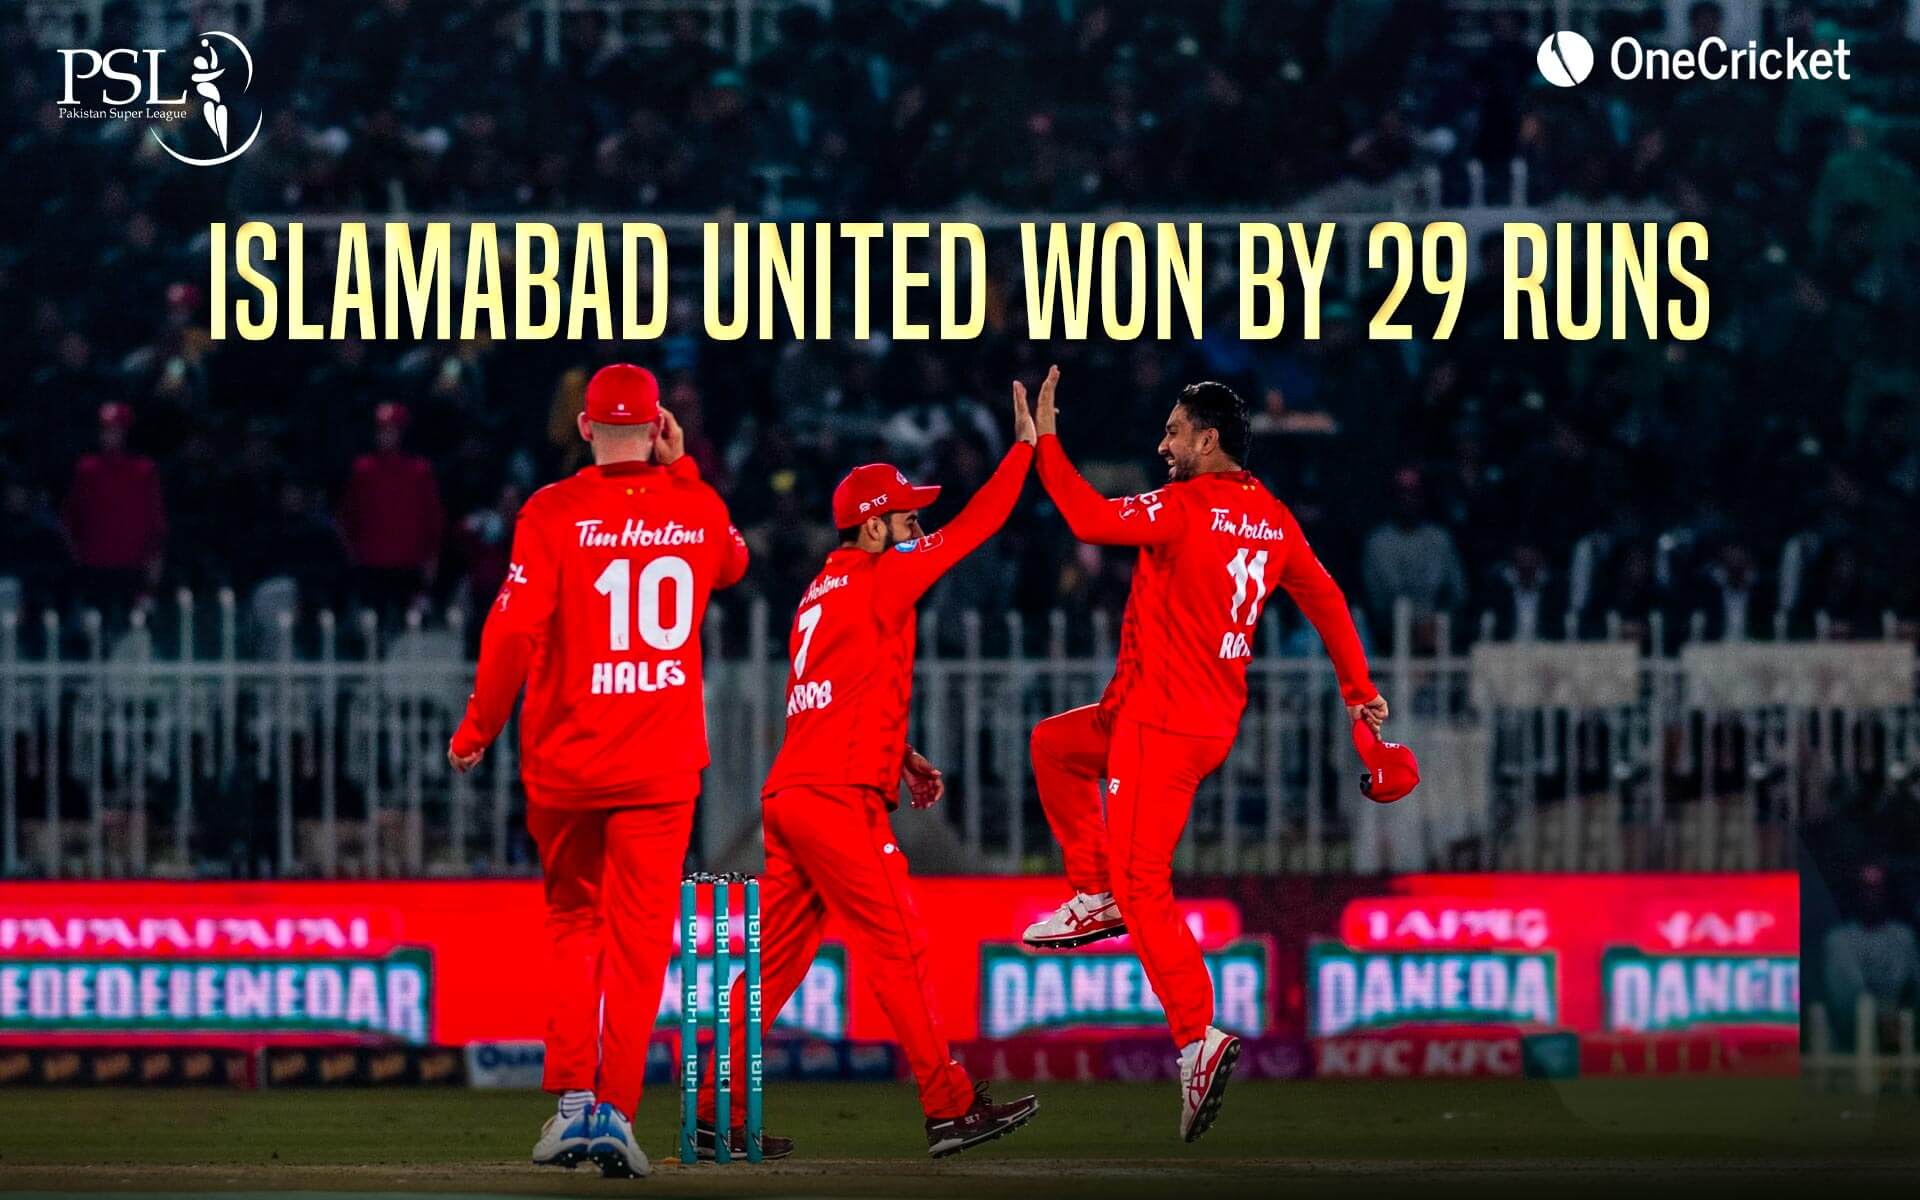 Islamabad United defeated Peshawar Zalmi convincingly